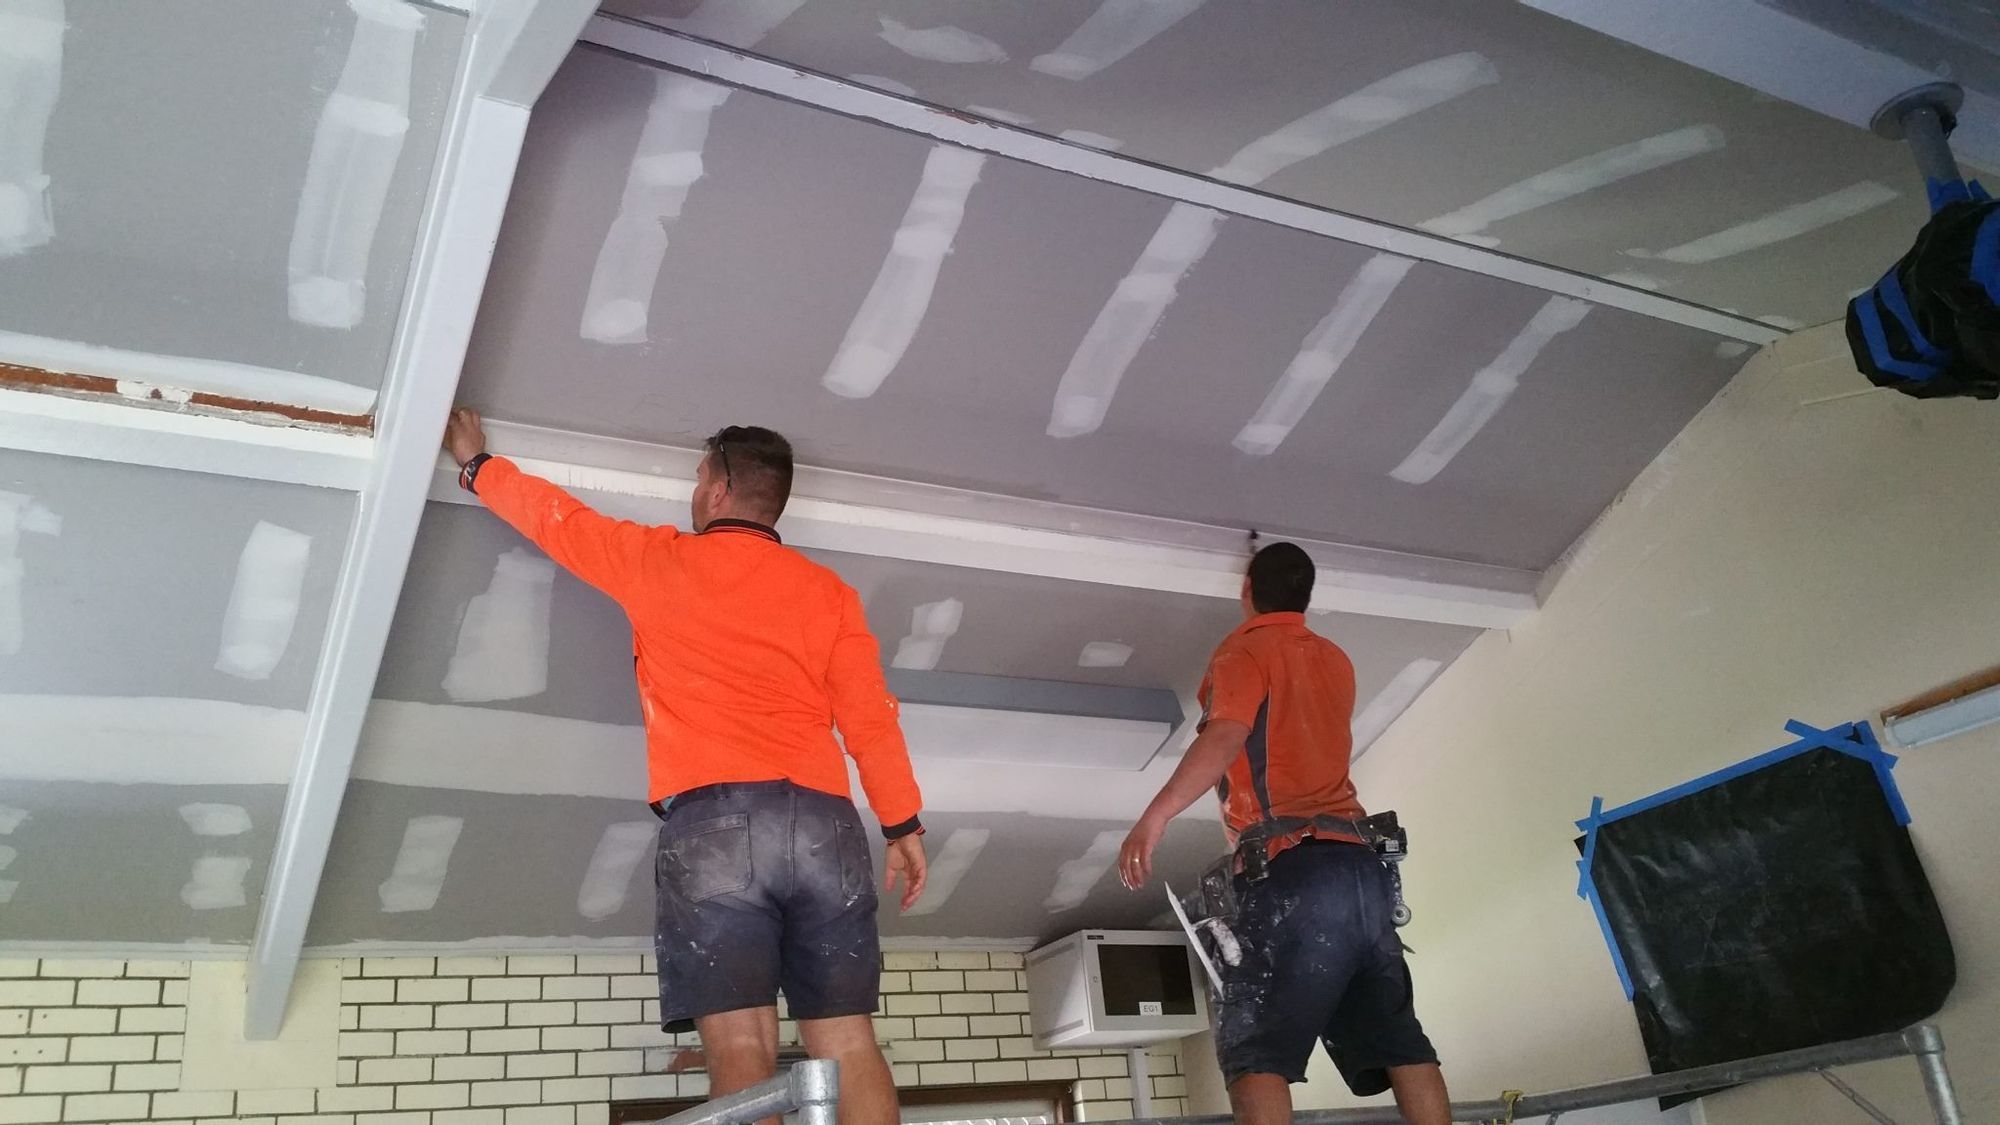 Getting the job done | We repair ceilings right across Perth (0)